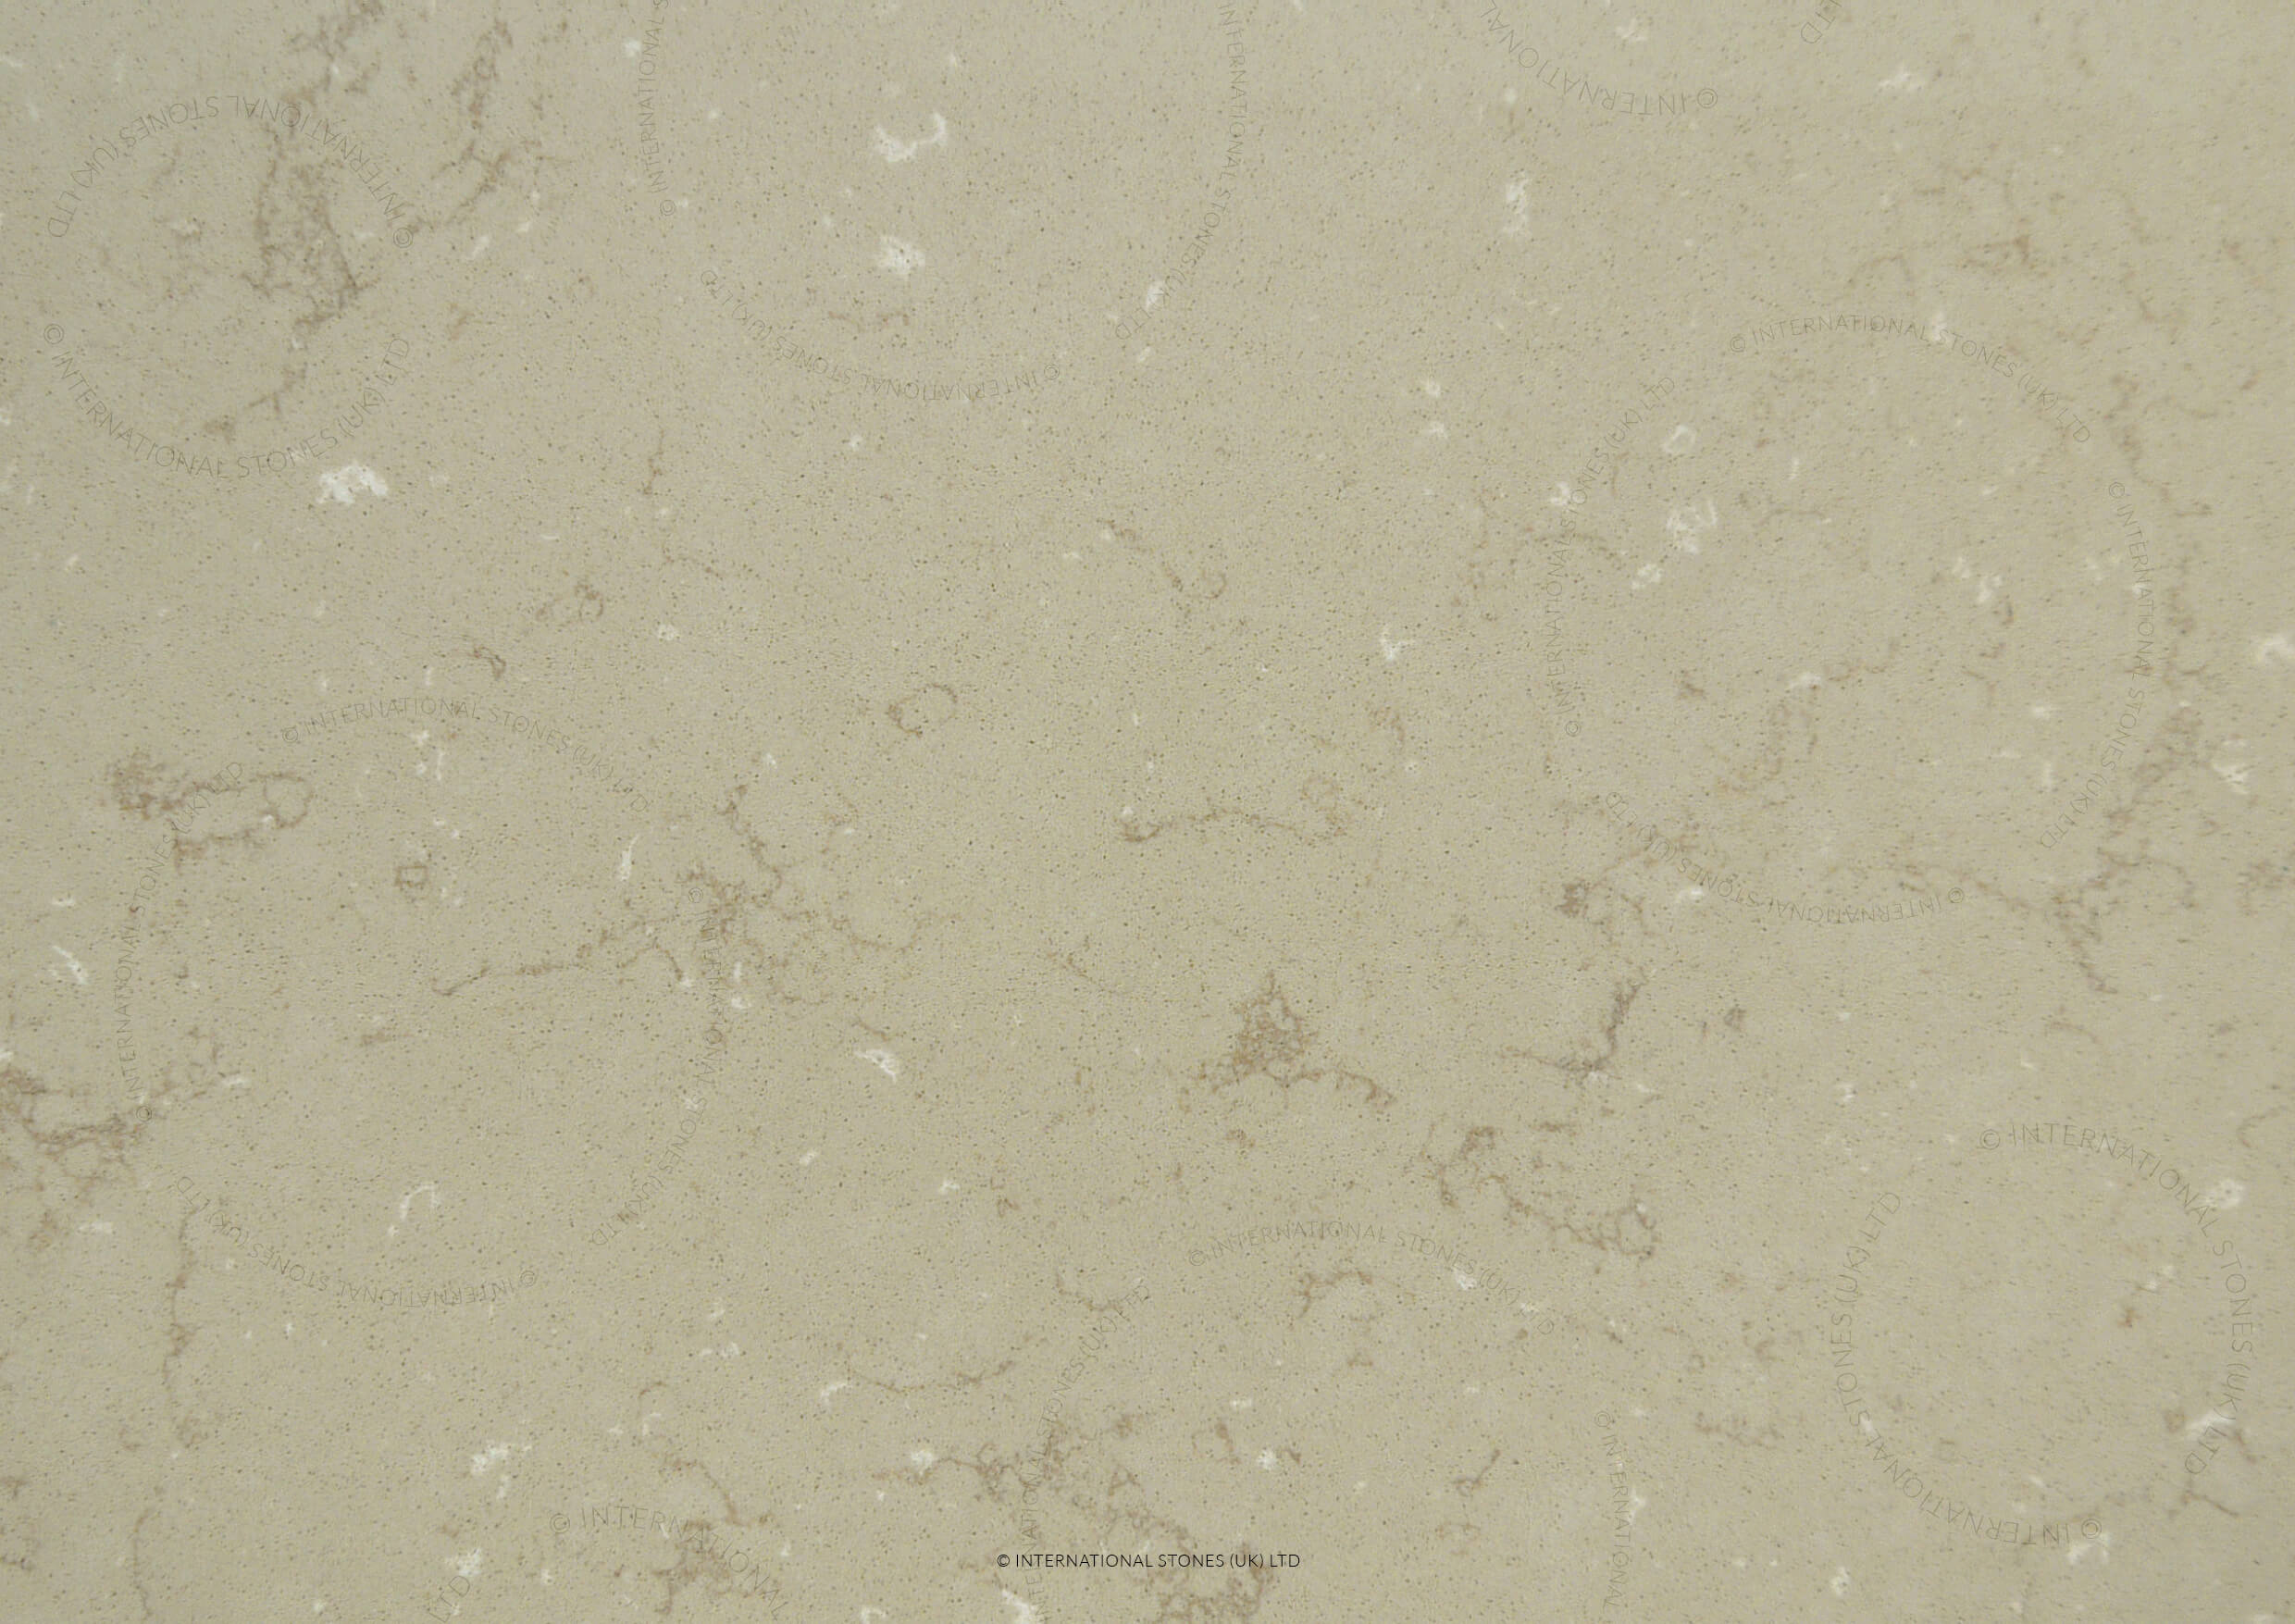 International Stone IQ Limestone - sheffield - Spinkhill